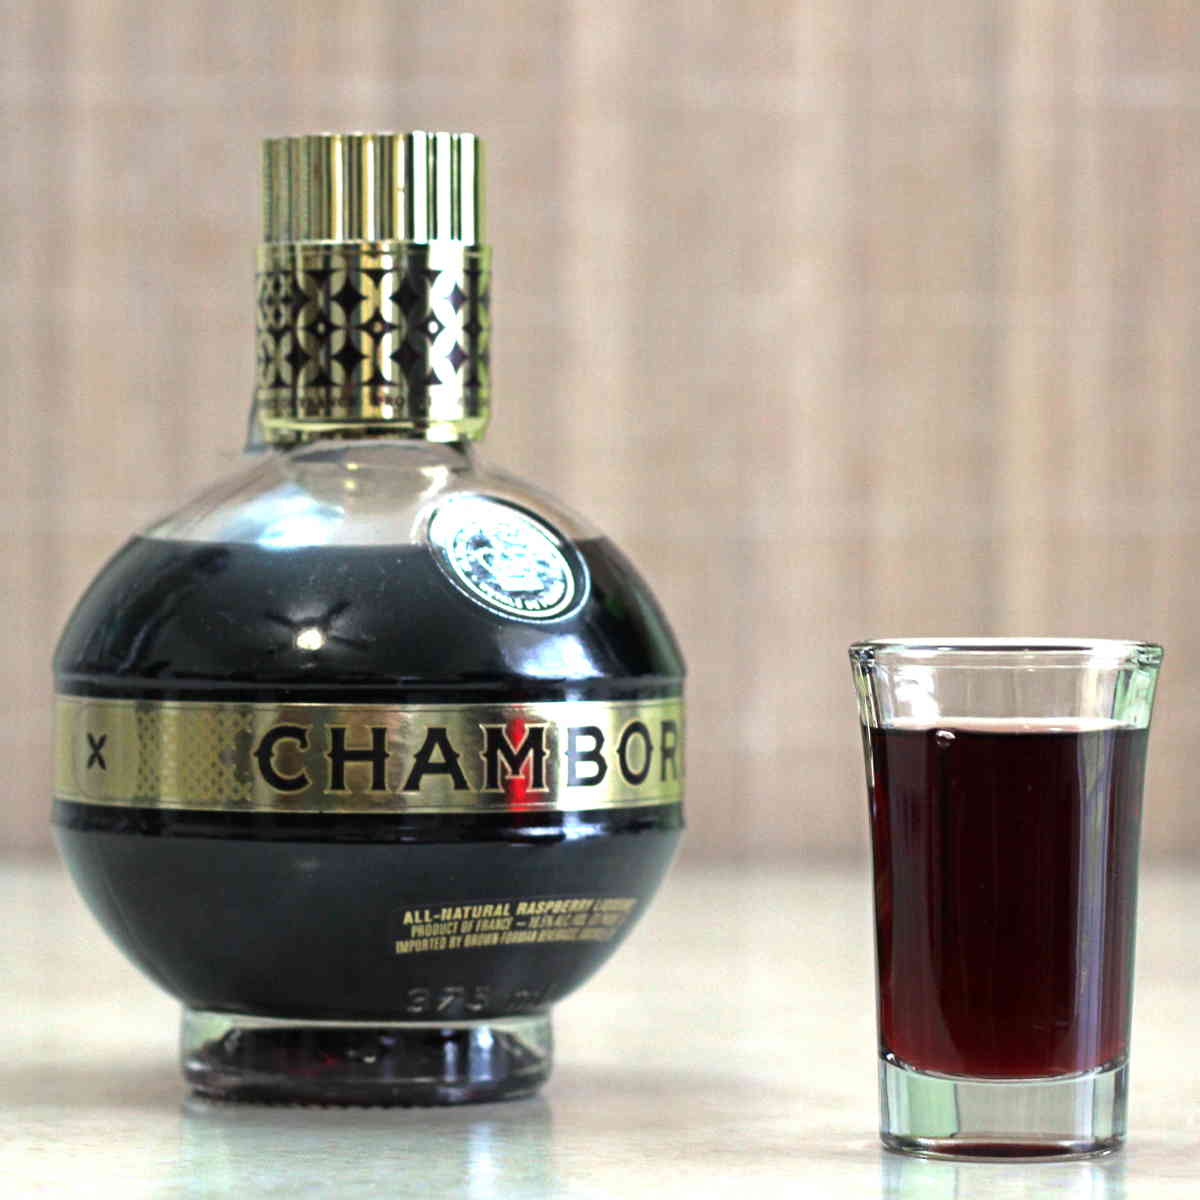 Шамбор (chambord) – ликер, который пили французские короли